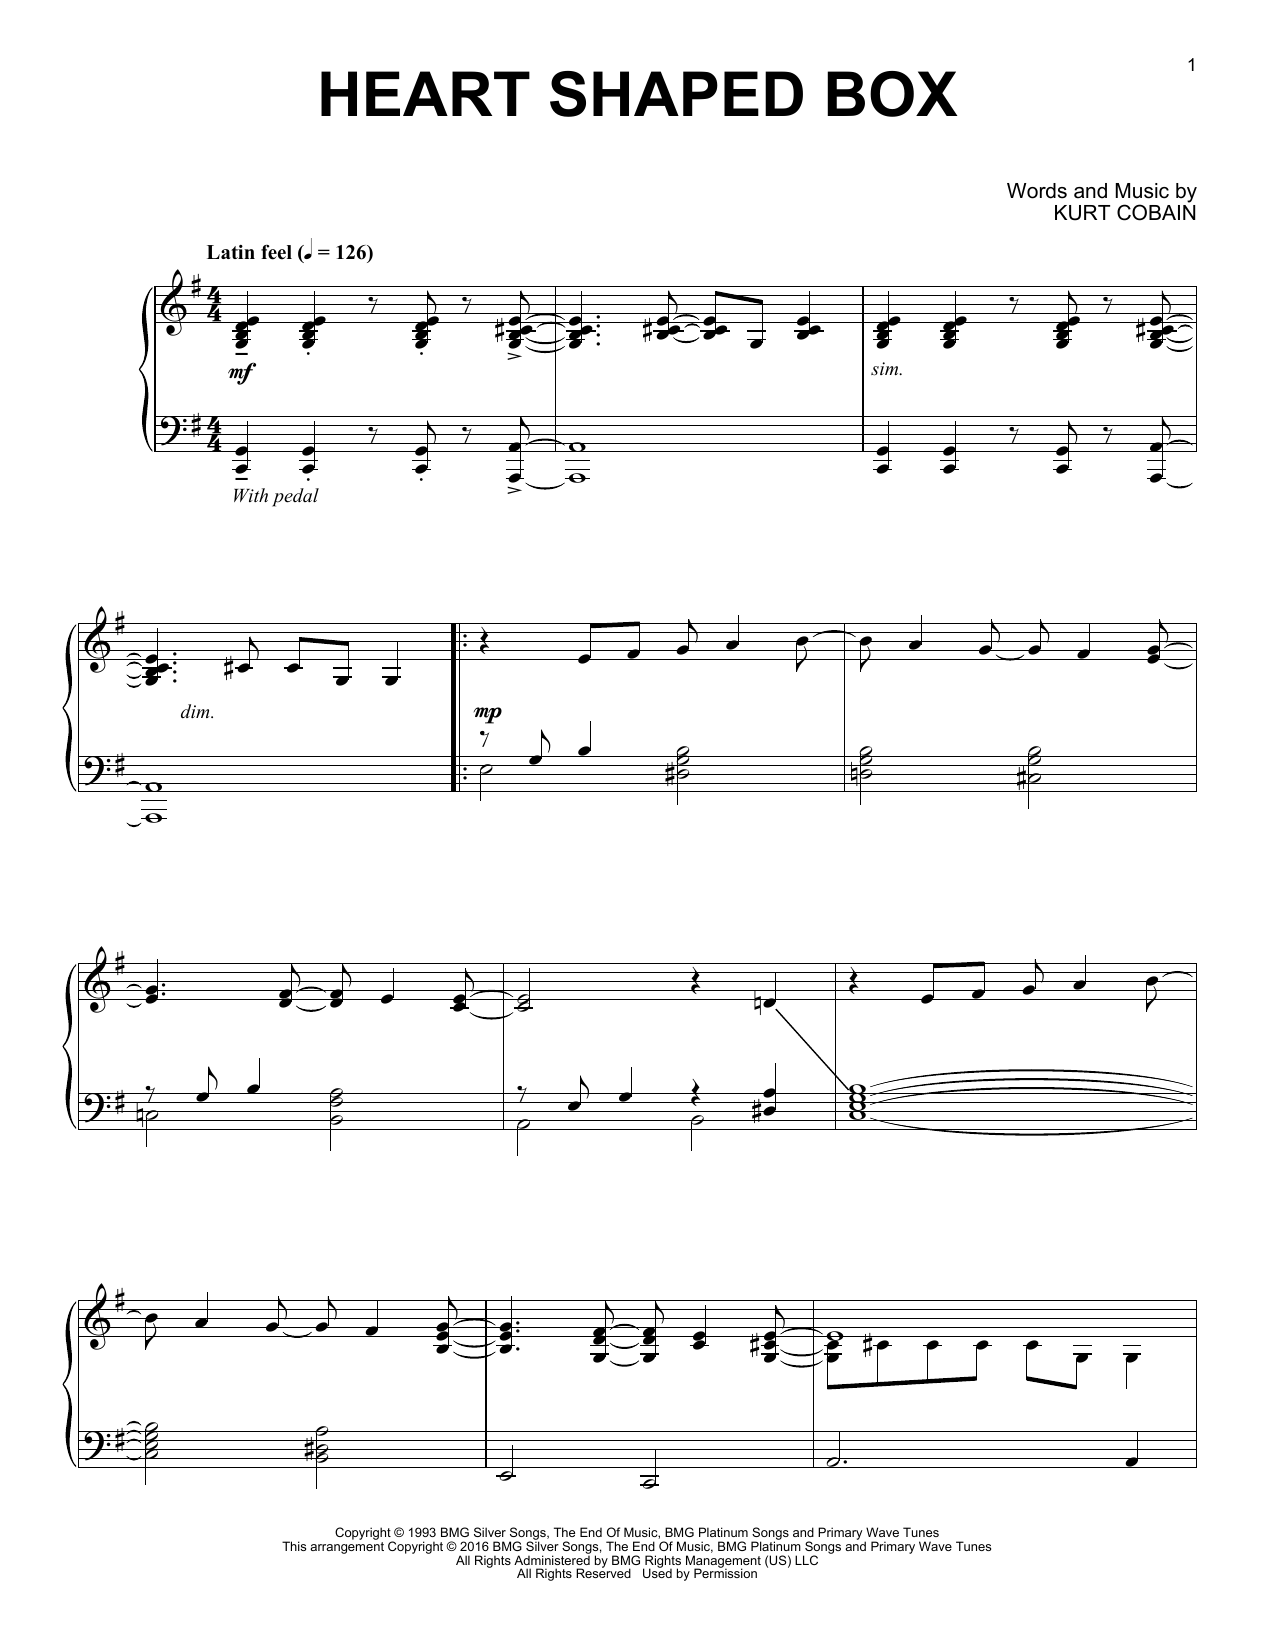 Nirvana Heart Shaped Box [Jazz version] Sheet Music Notes & Chords for Piano - Download or Print PDF